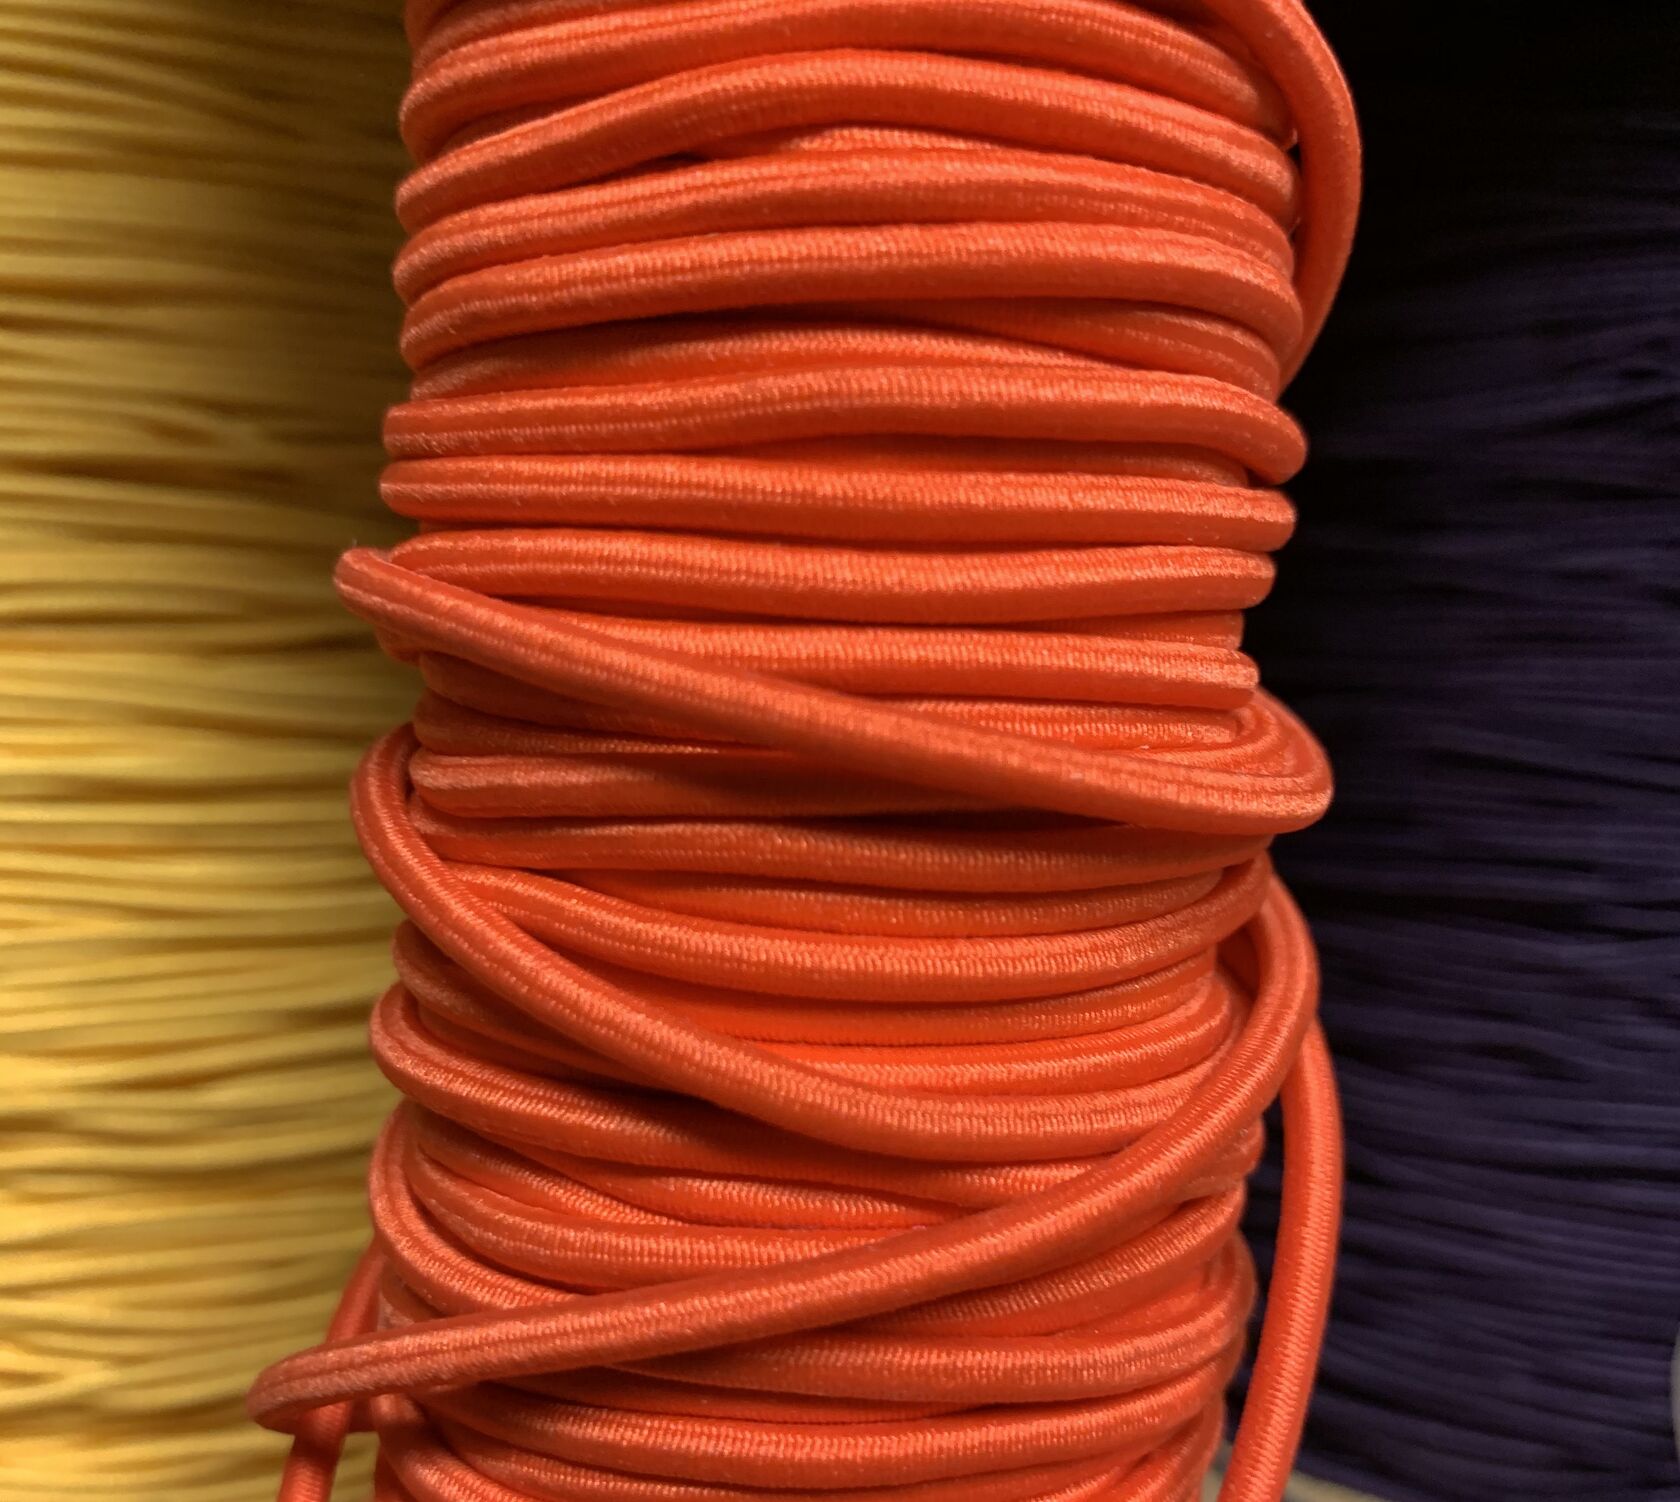 https://www.croftmill.co.uk/images/pictures/2019/shop/haberdashery/orange-elastic-cord-drawstring-2-5mm-(840x751).jpg?v=735337b9&mode=h